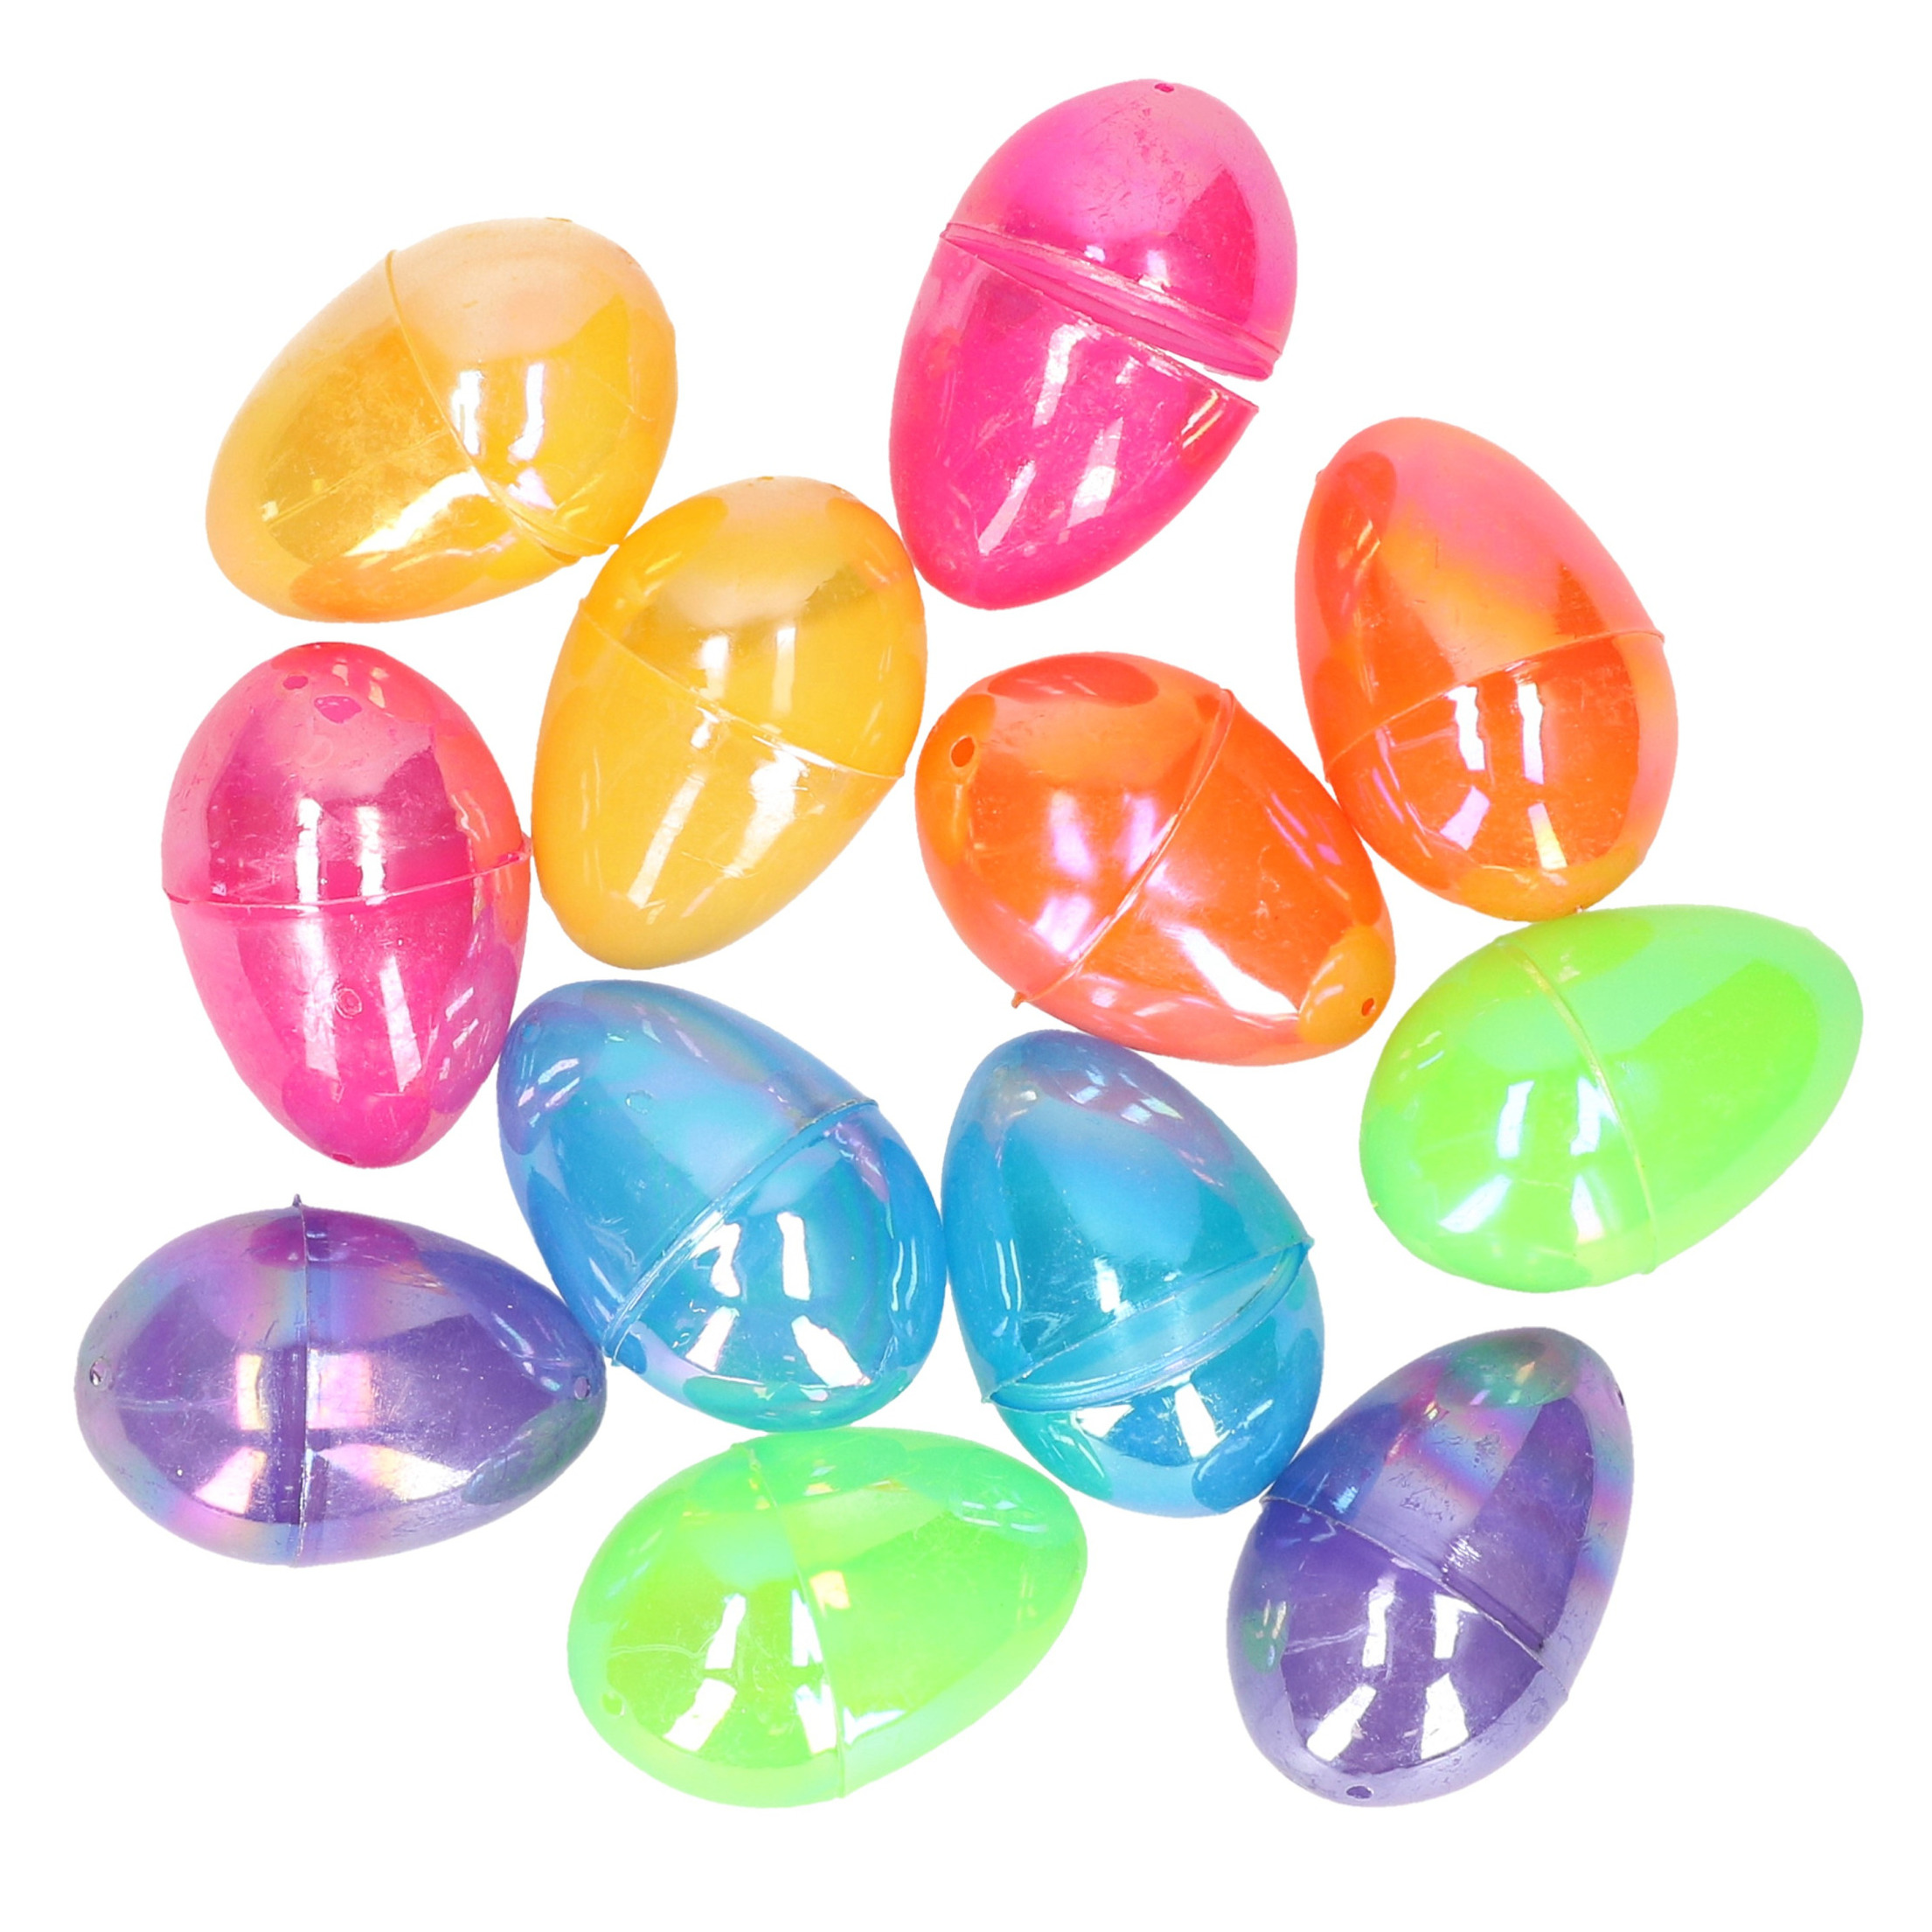 12x stuks gekleurde metallic eieren-paaseieren 6 cm